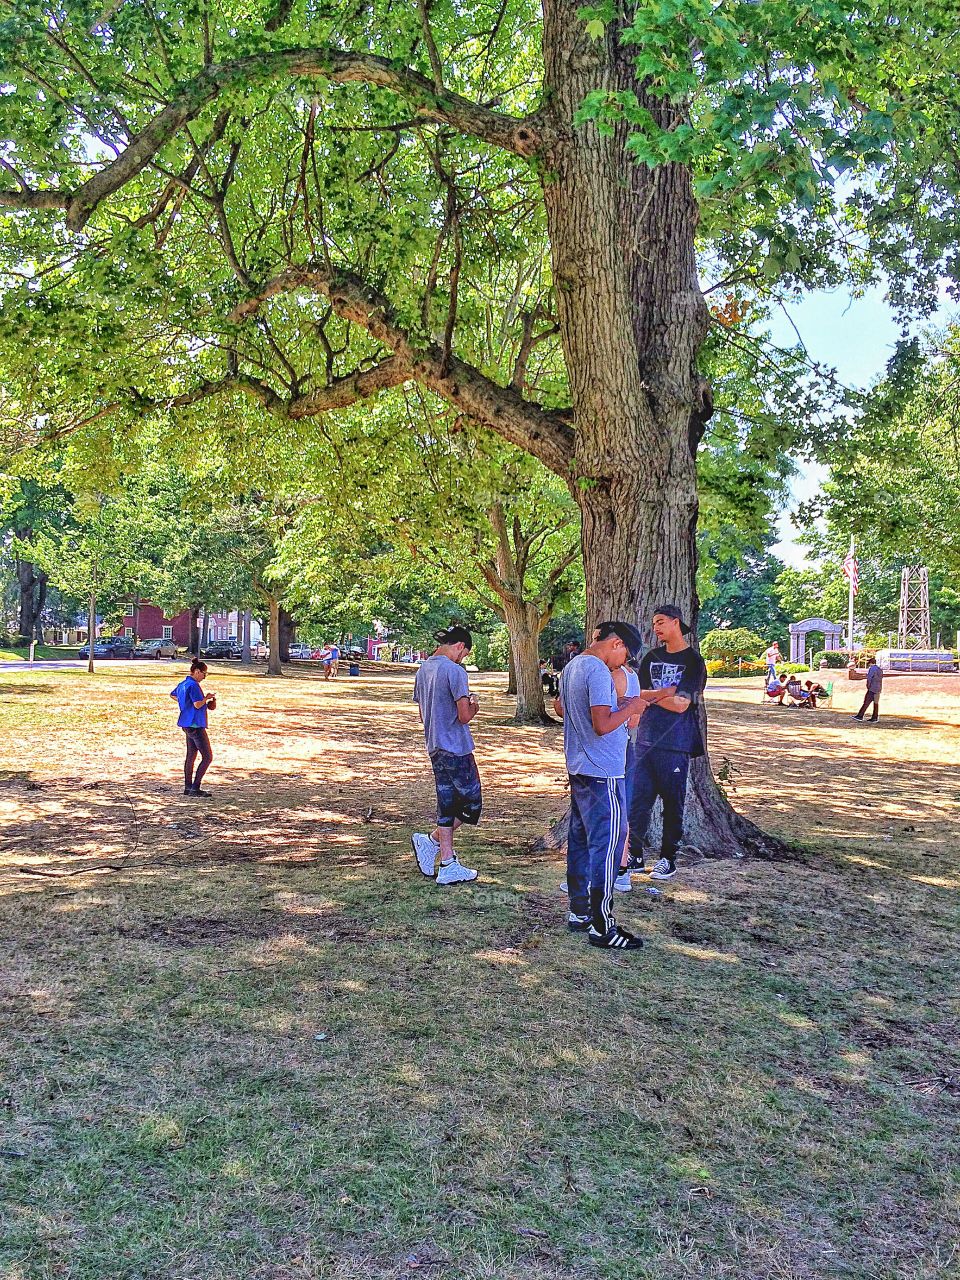 People standing in park near big tree